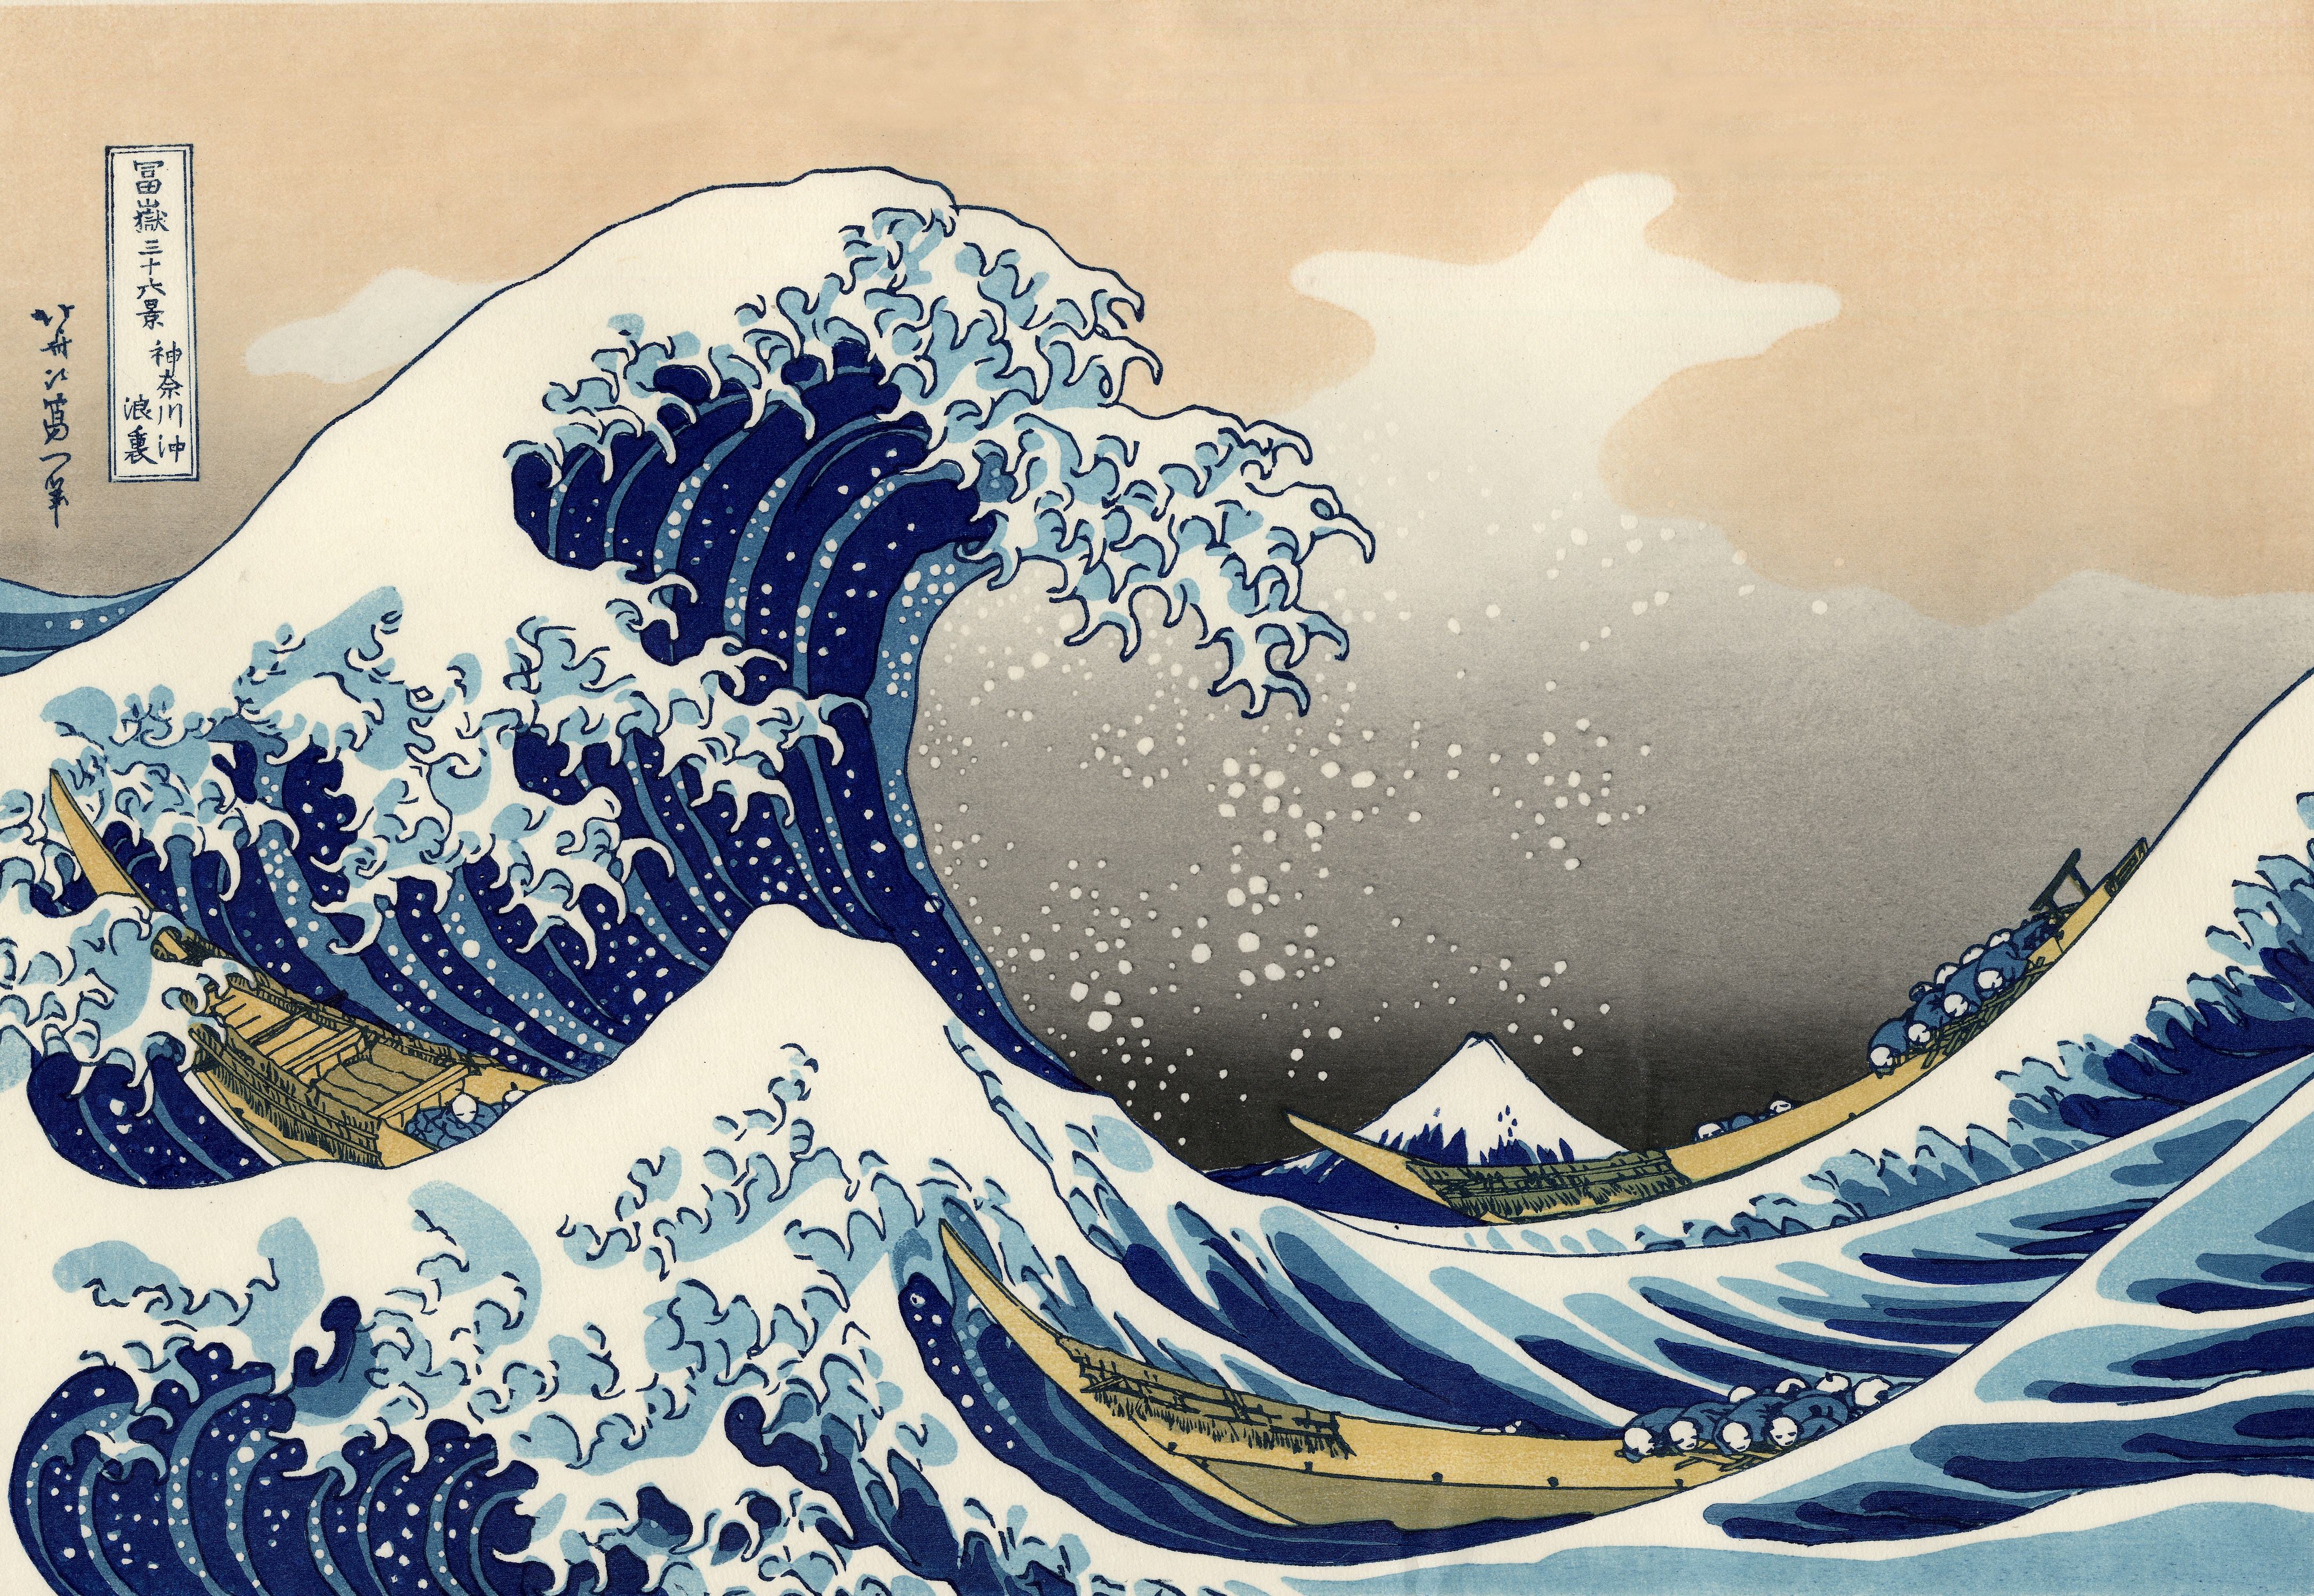 wave, artistic, the great wave off kanagawa 8K